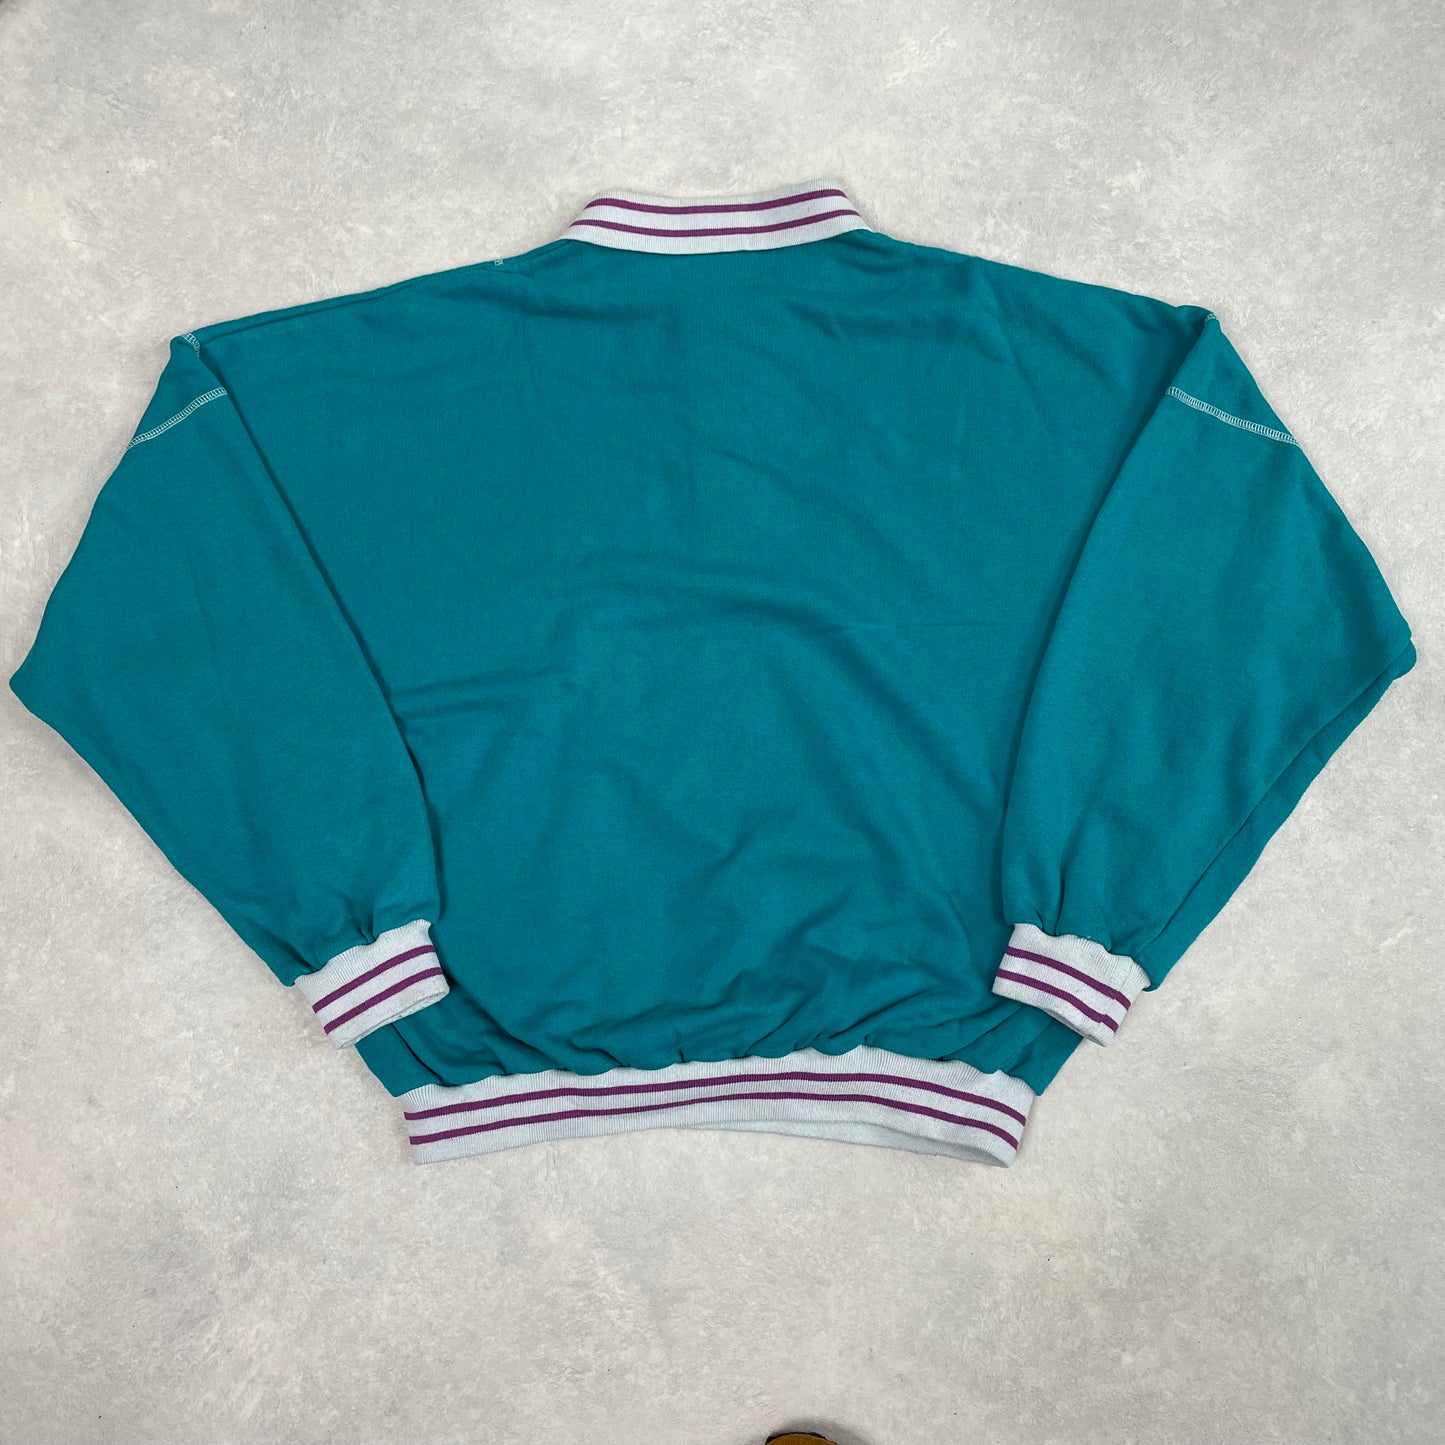 Vintage adidas Sweater New Guinea University 80’s